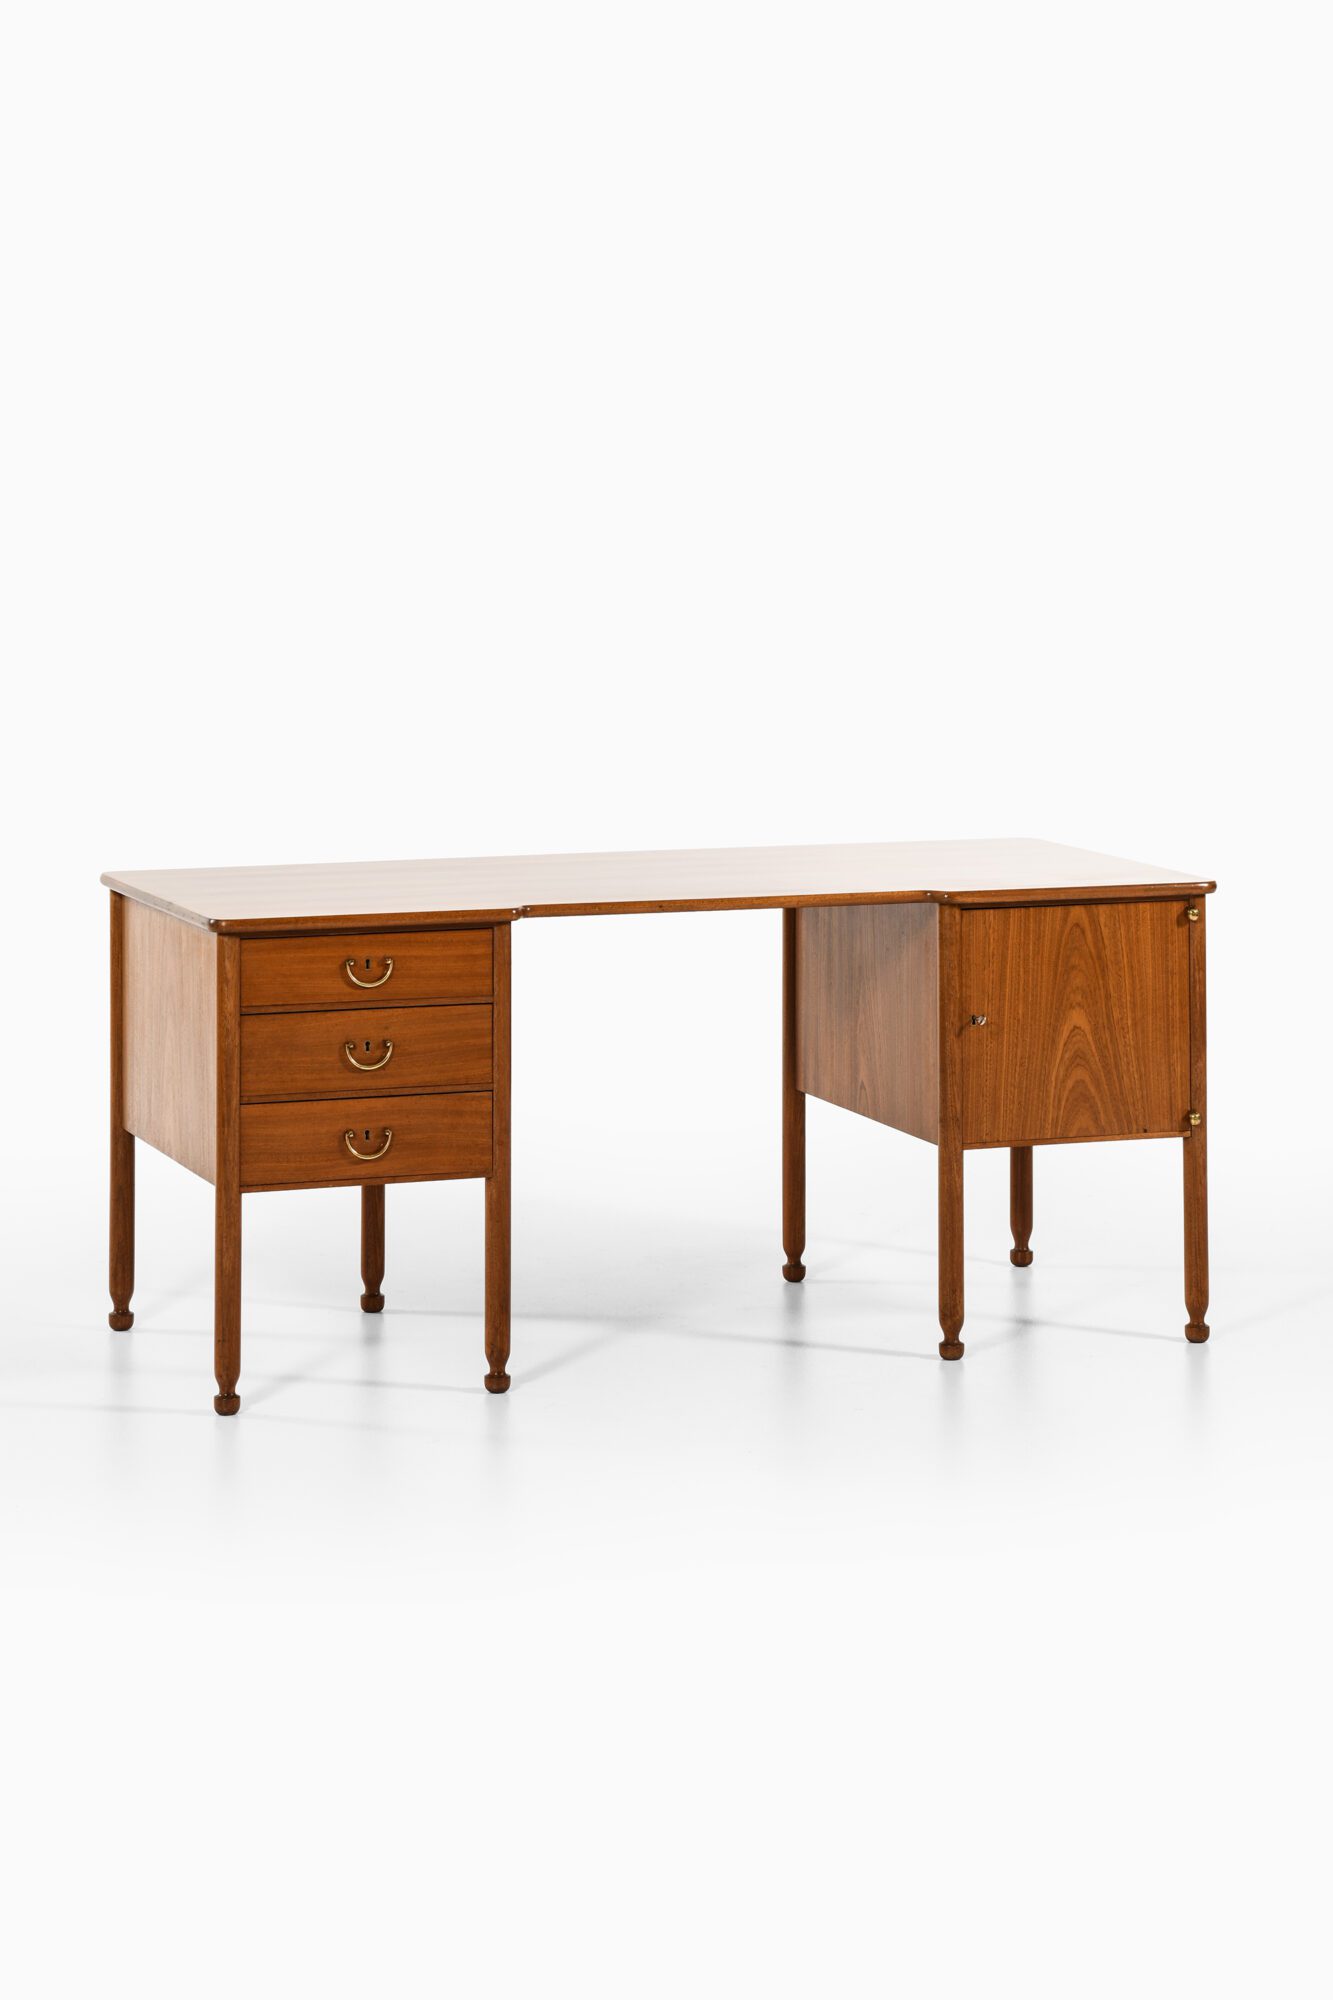 Josef Frank desk model 770 in mahogany at Studio Schalling